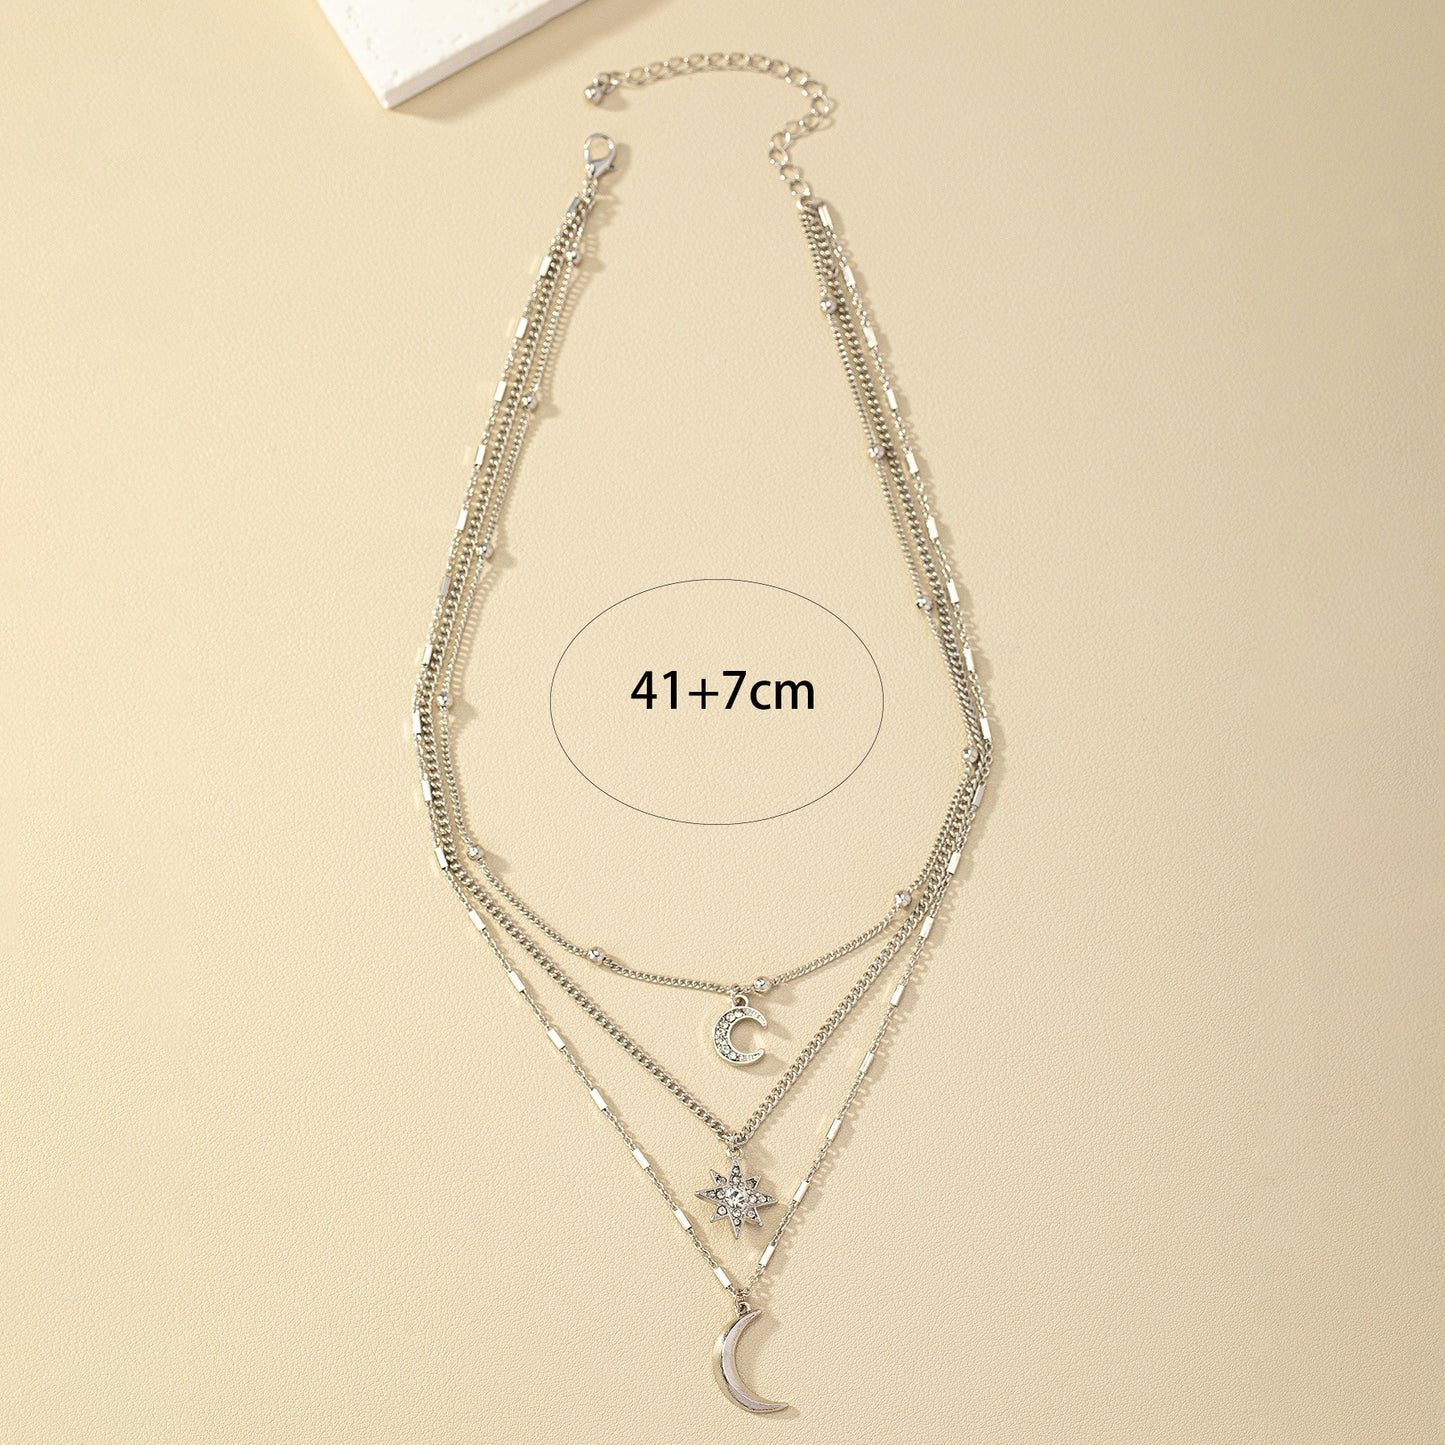 Luxurious Vienna Verve Triple-Layer Collarbone Necklace - Metal Jewelry Piece